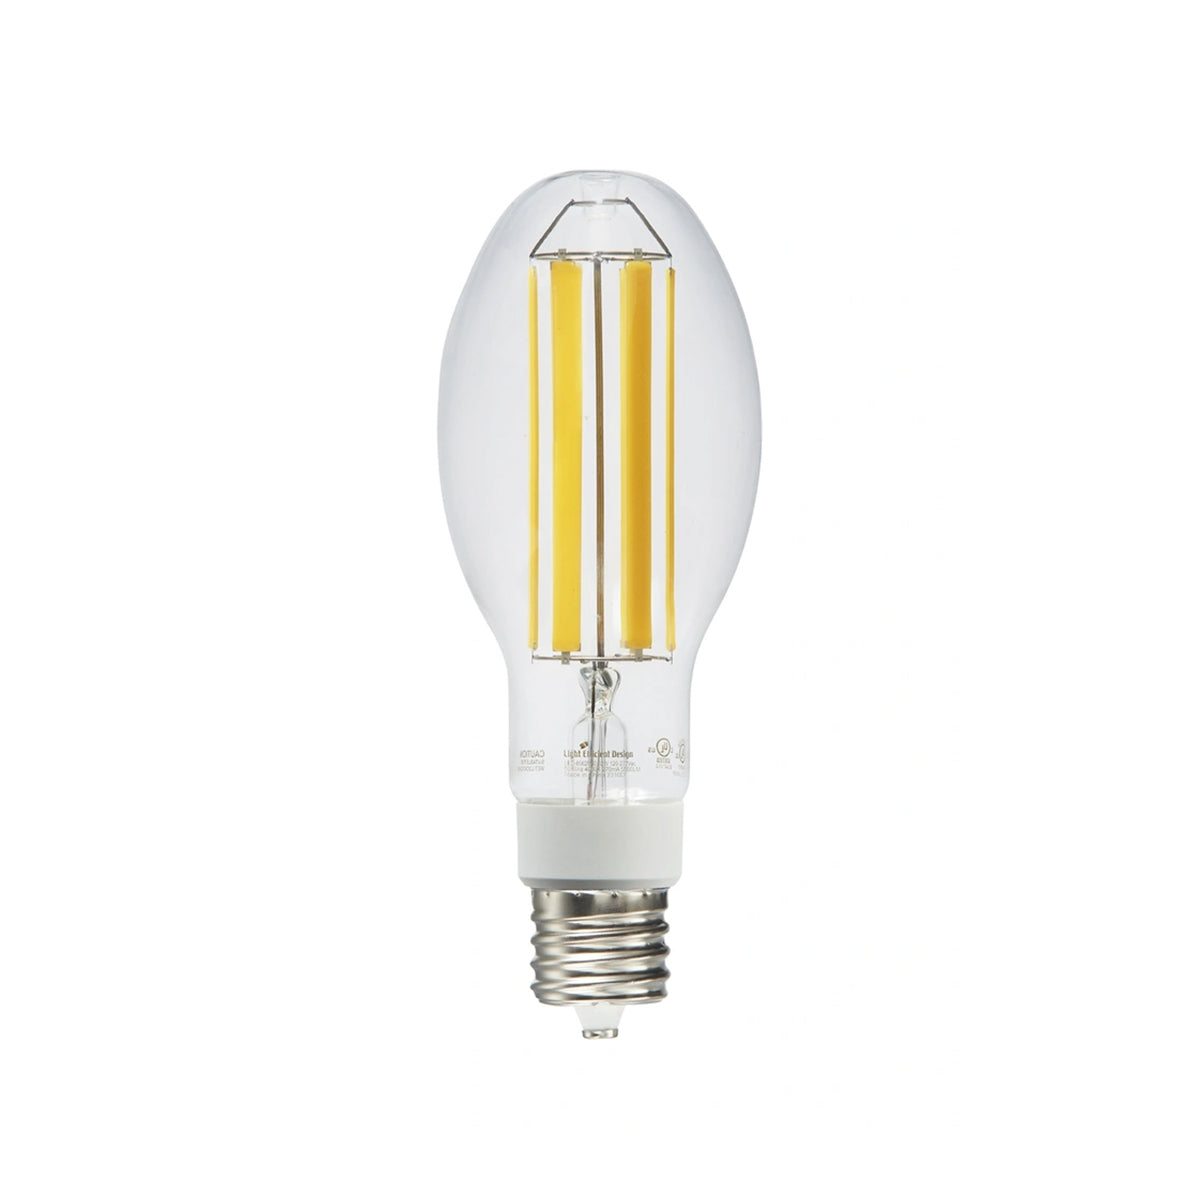 ED28 Filament Style Retrofit Bulb, 250W HID, 45 Watt, 7500 Lumens, 5000K, EX39 Mogul Extended Base, Clear Finish